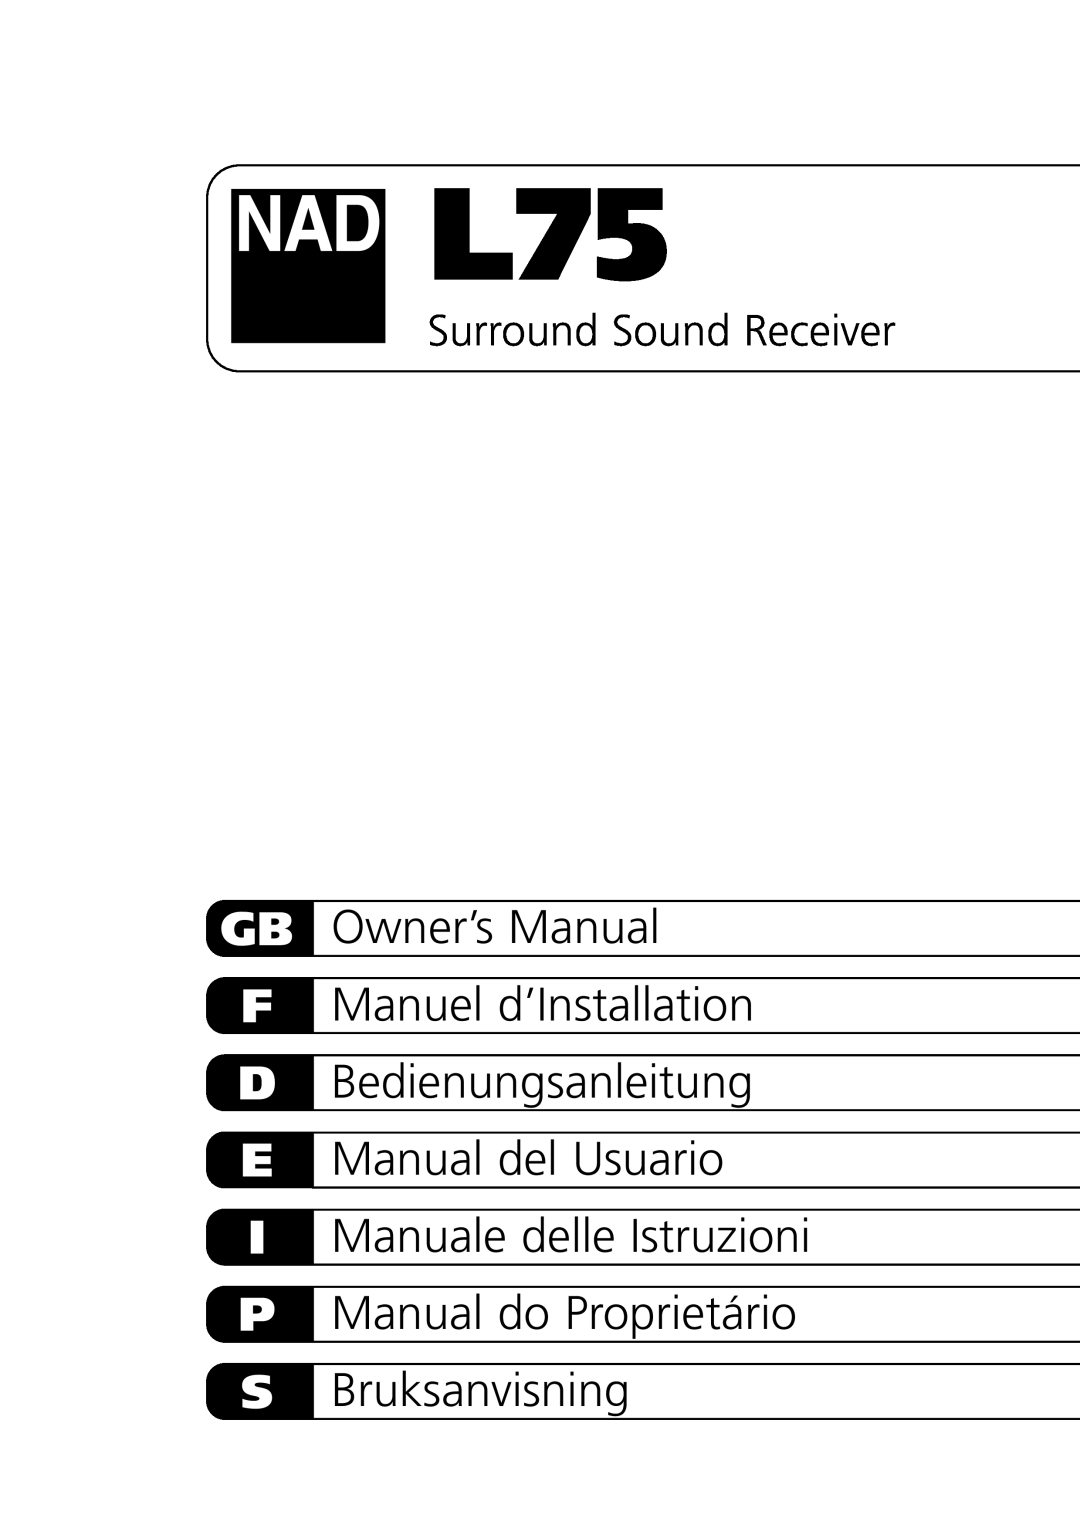 NAD L75 owner manual Gb F D E I P S, Bedienungsanleitung Manual del Usuario, Bruksanvisning, Surround Sound Receiver 